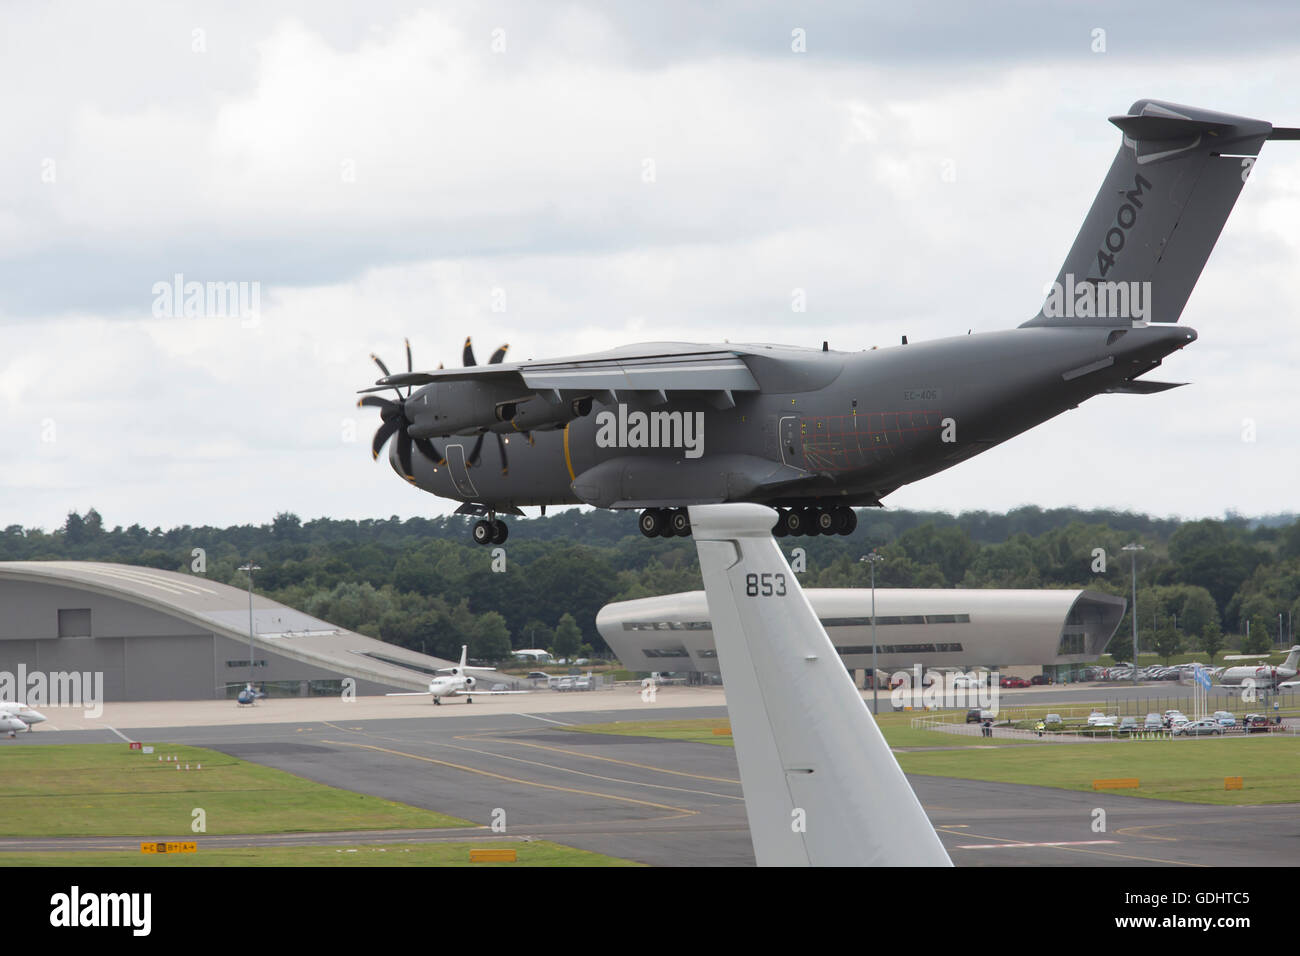 Farnborough, UK,17 Juillet 2016,Airbus A400M au salon Farnborough International Airshow 2016©Keith Larby/Alamy Live News Banque D'Images